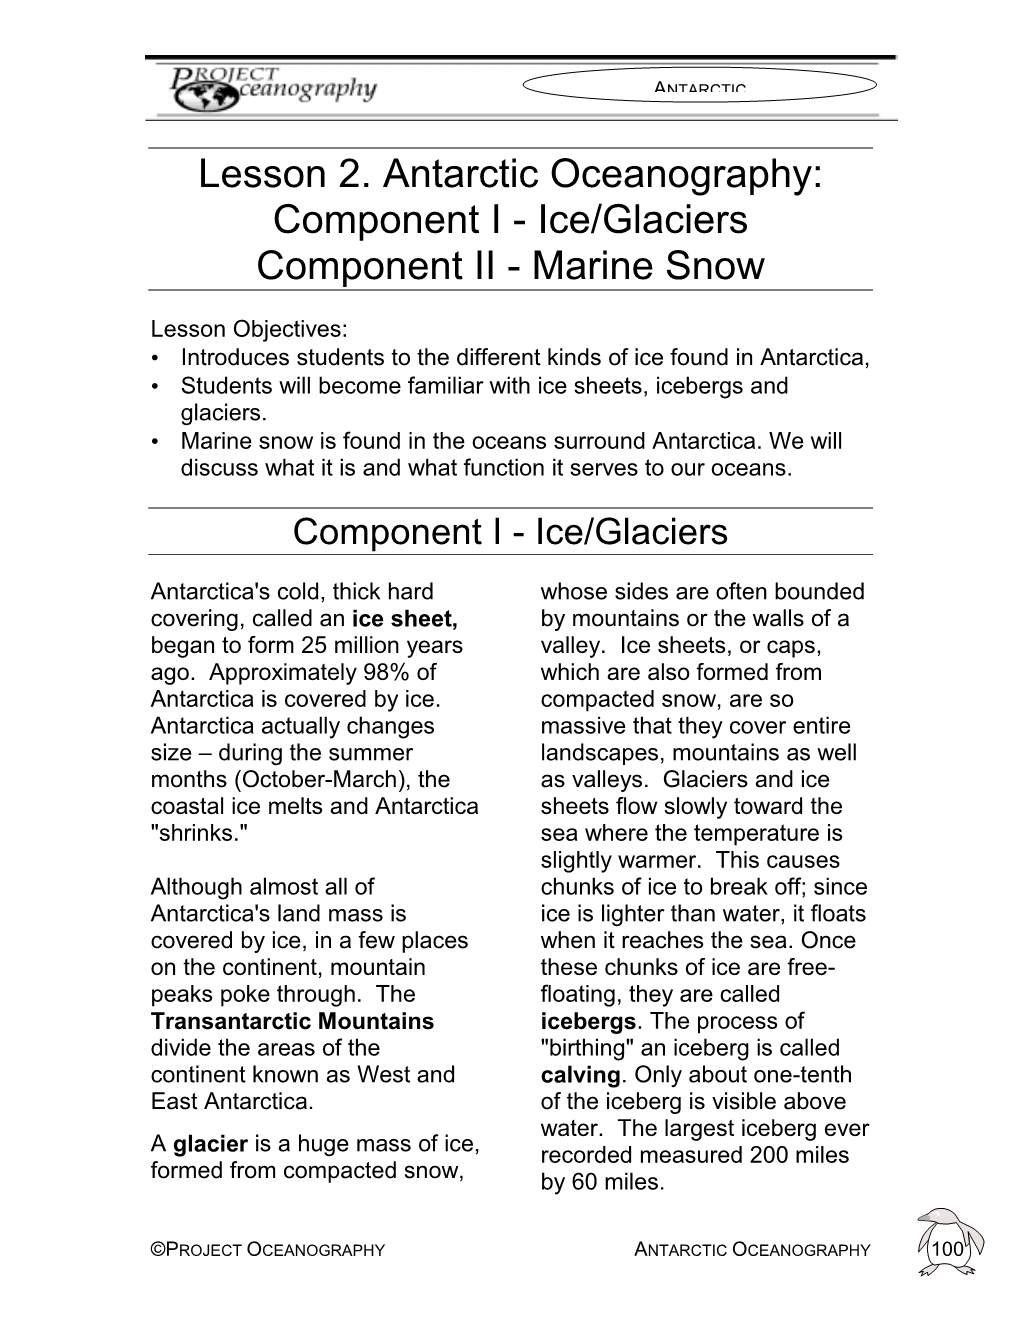 Lesson 2. Antarctic Oceanography: Component I - Ice/Glaciers Component II - Marine Snow